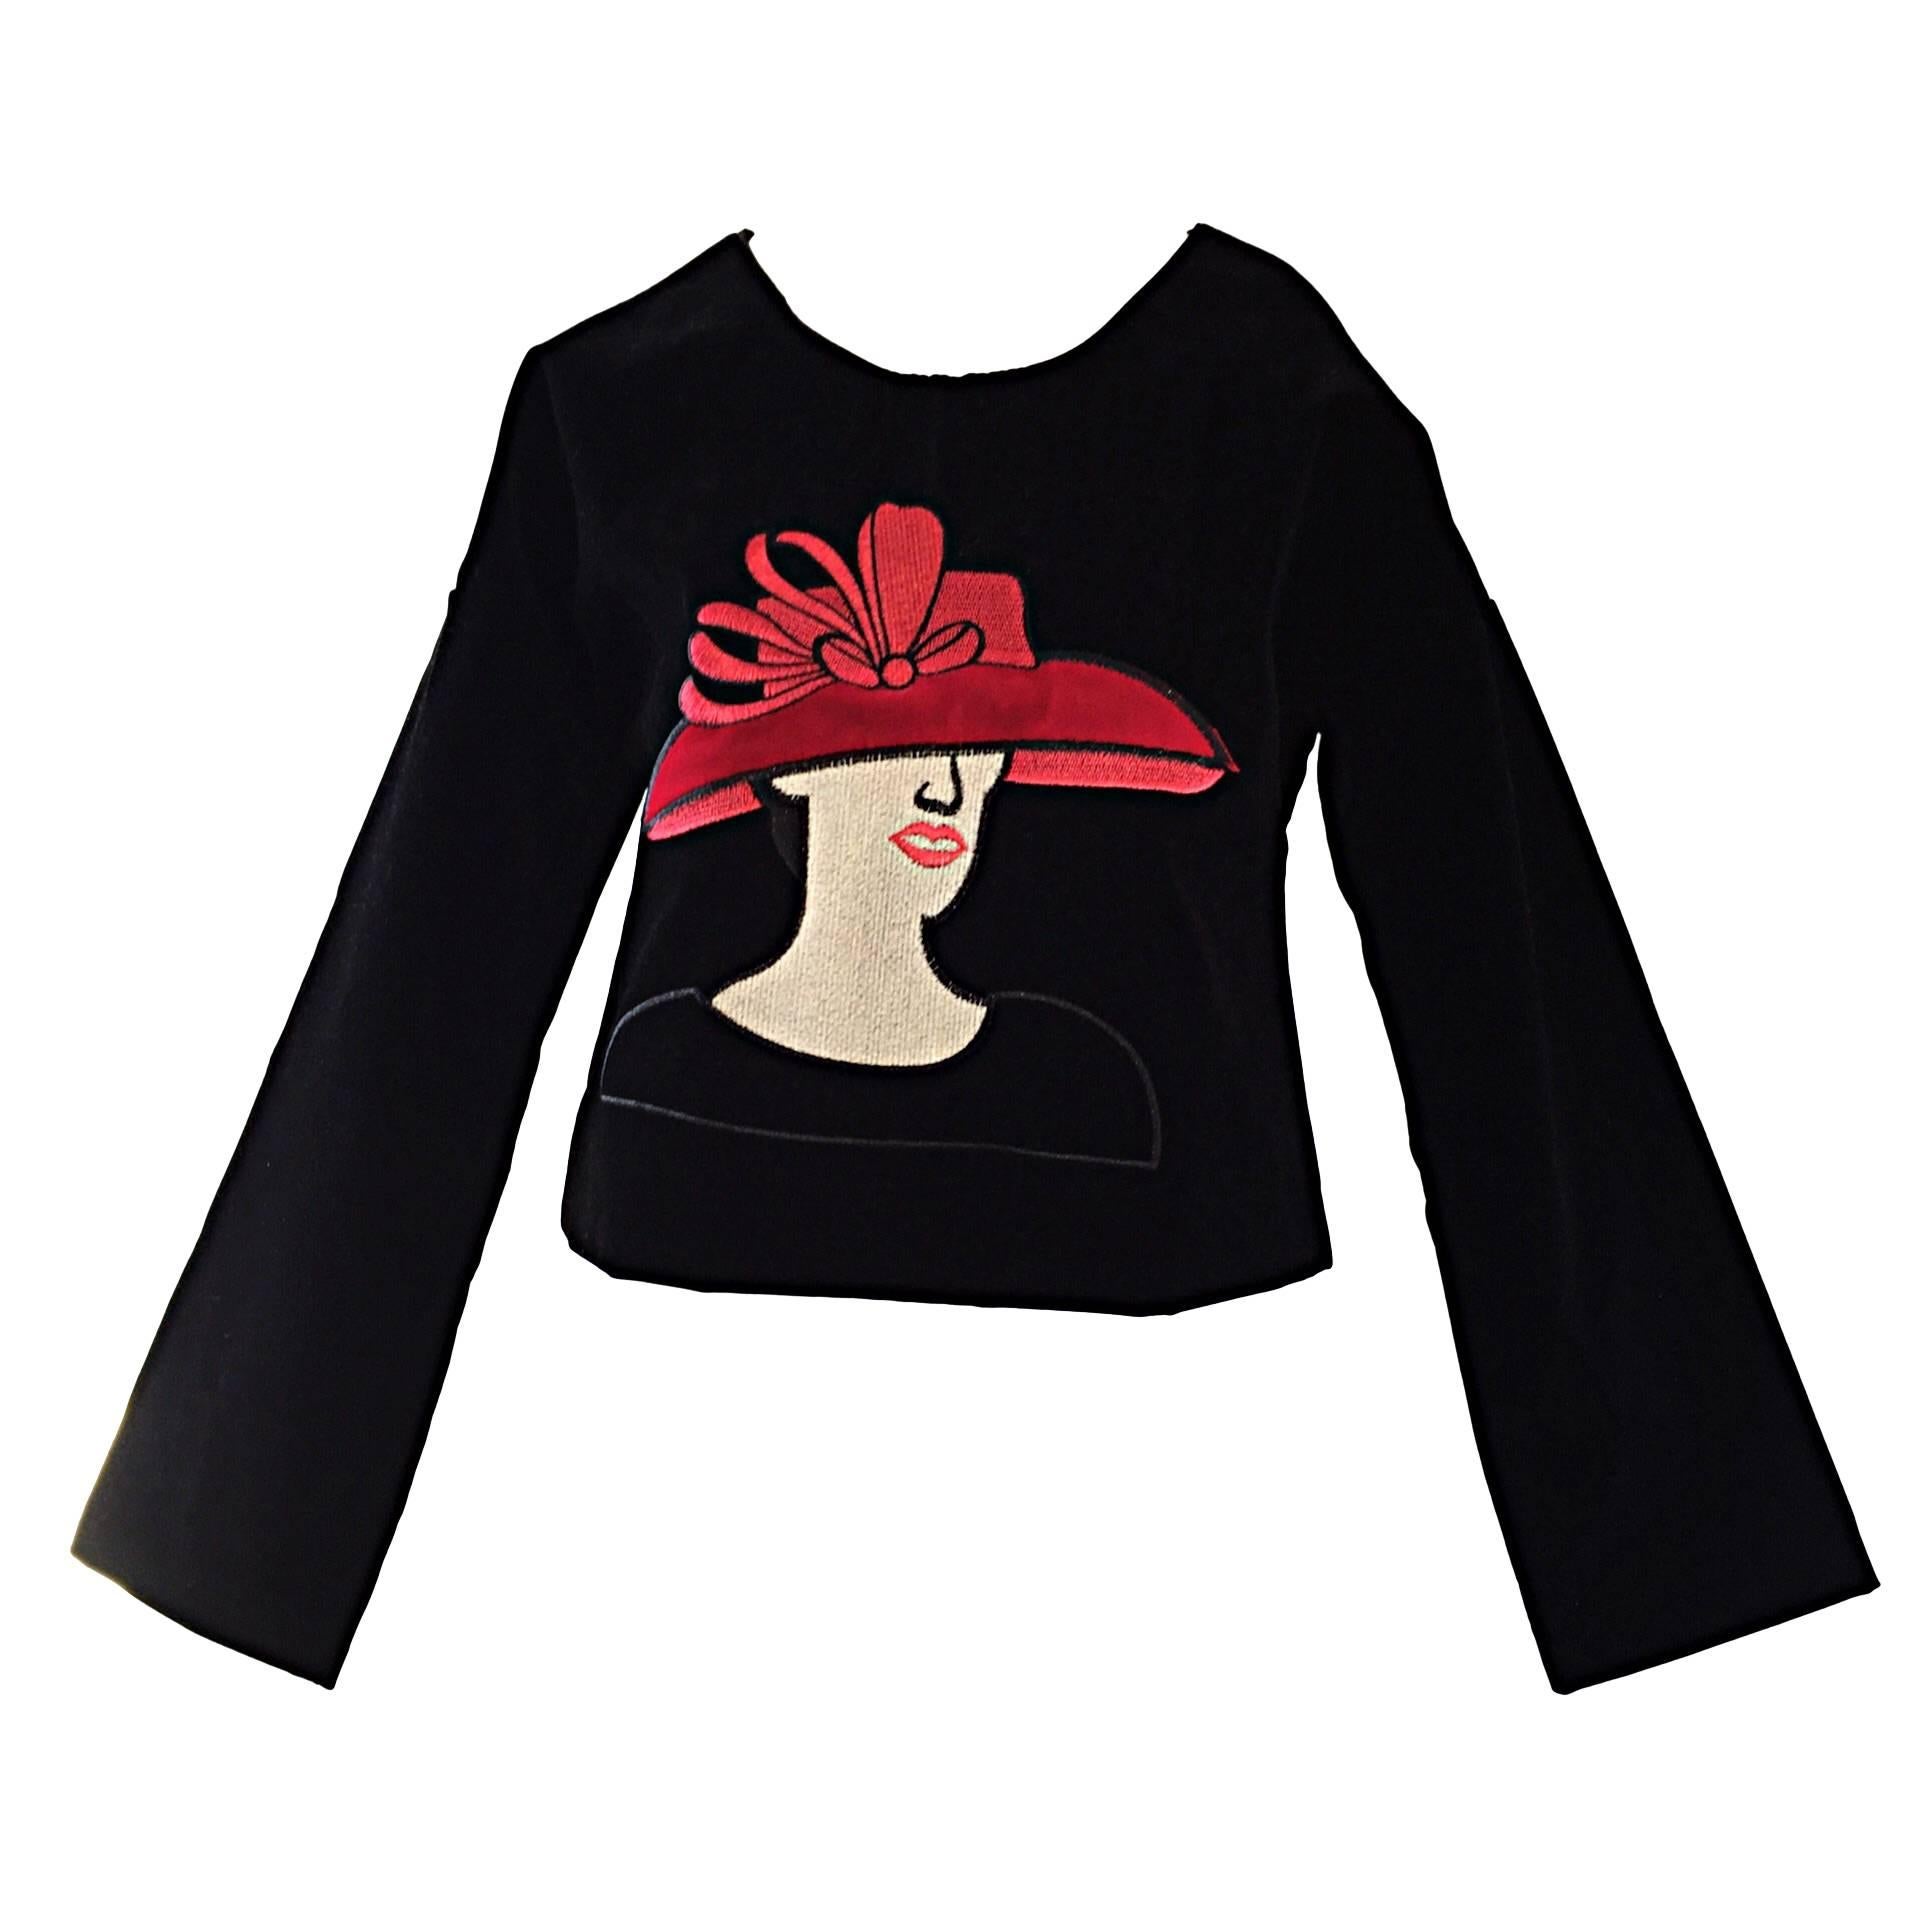 1980s Vintage 80s Novelty Velvet Crop Top Blouse w/ Lady in Red Hat  For Sale